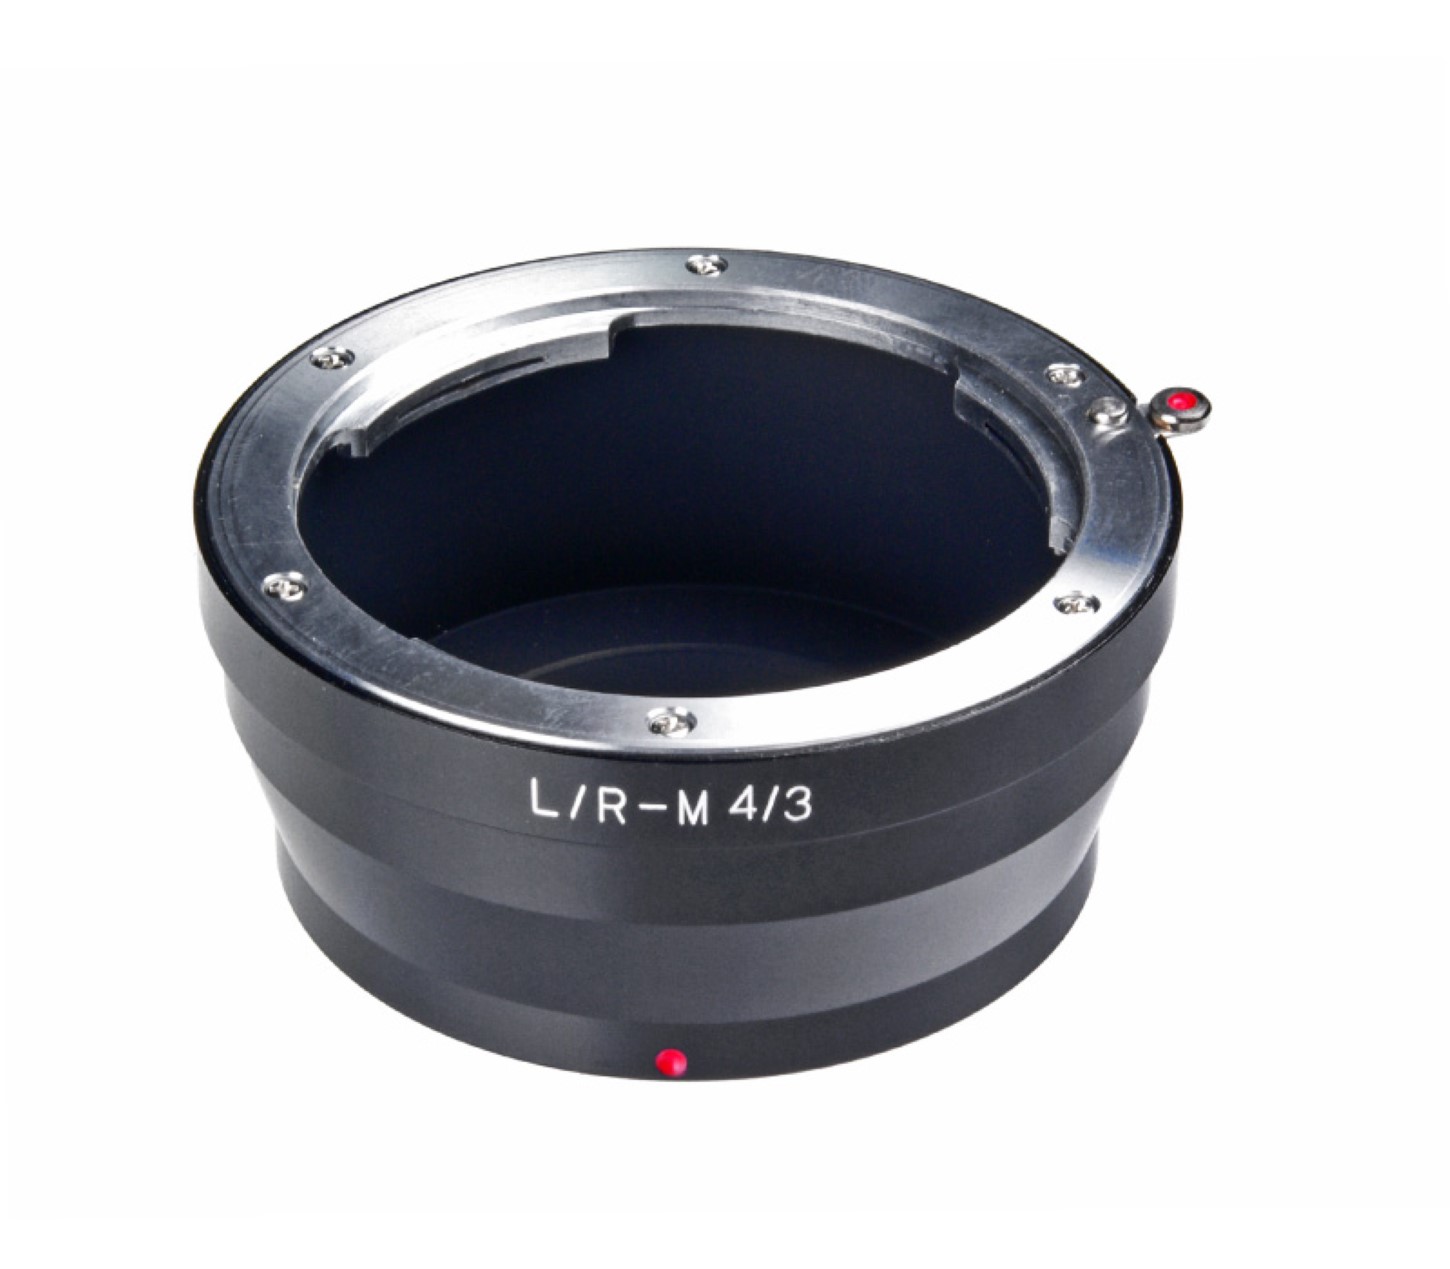 Leica R Objektive - Micro Four Thirds Adapter